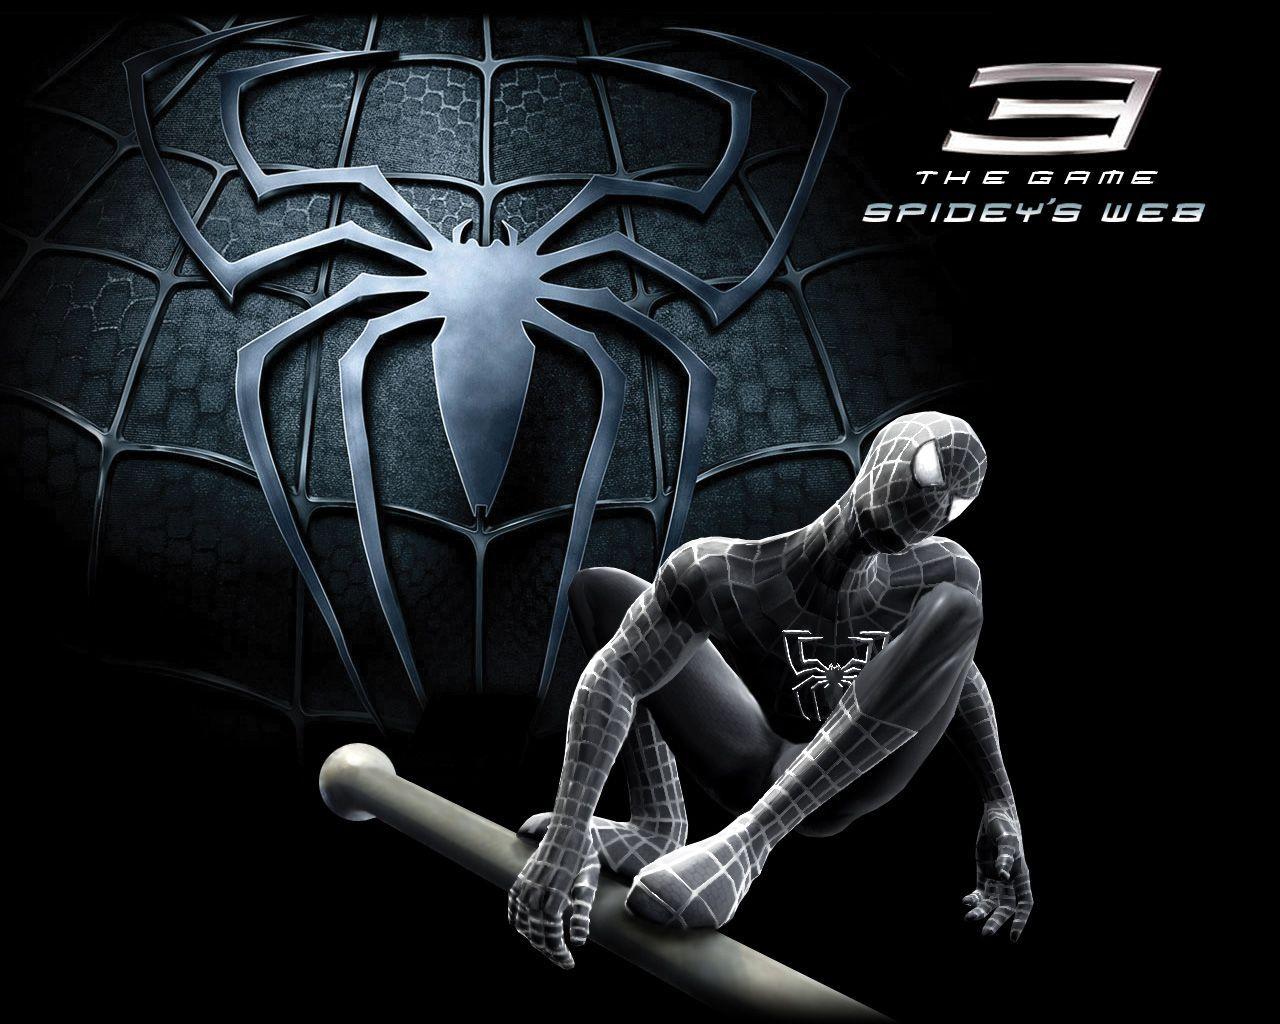 Amazing Spiderman Wallpaper for Desk×528 The Amazing Spider